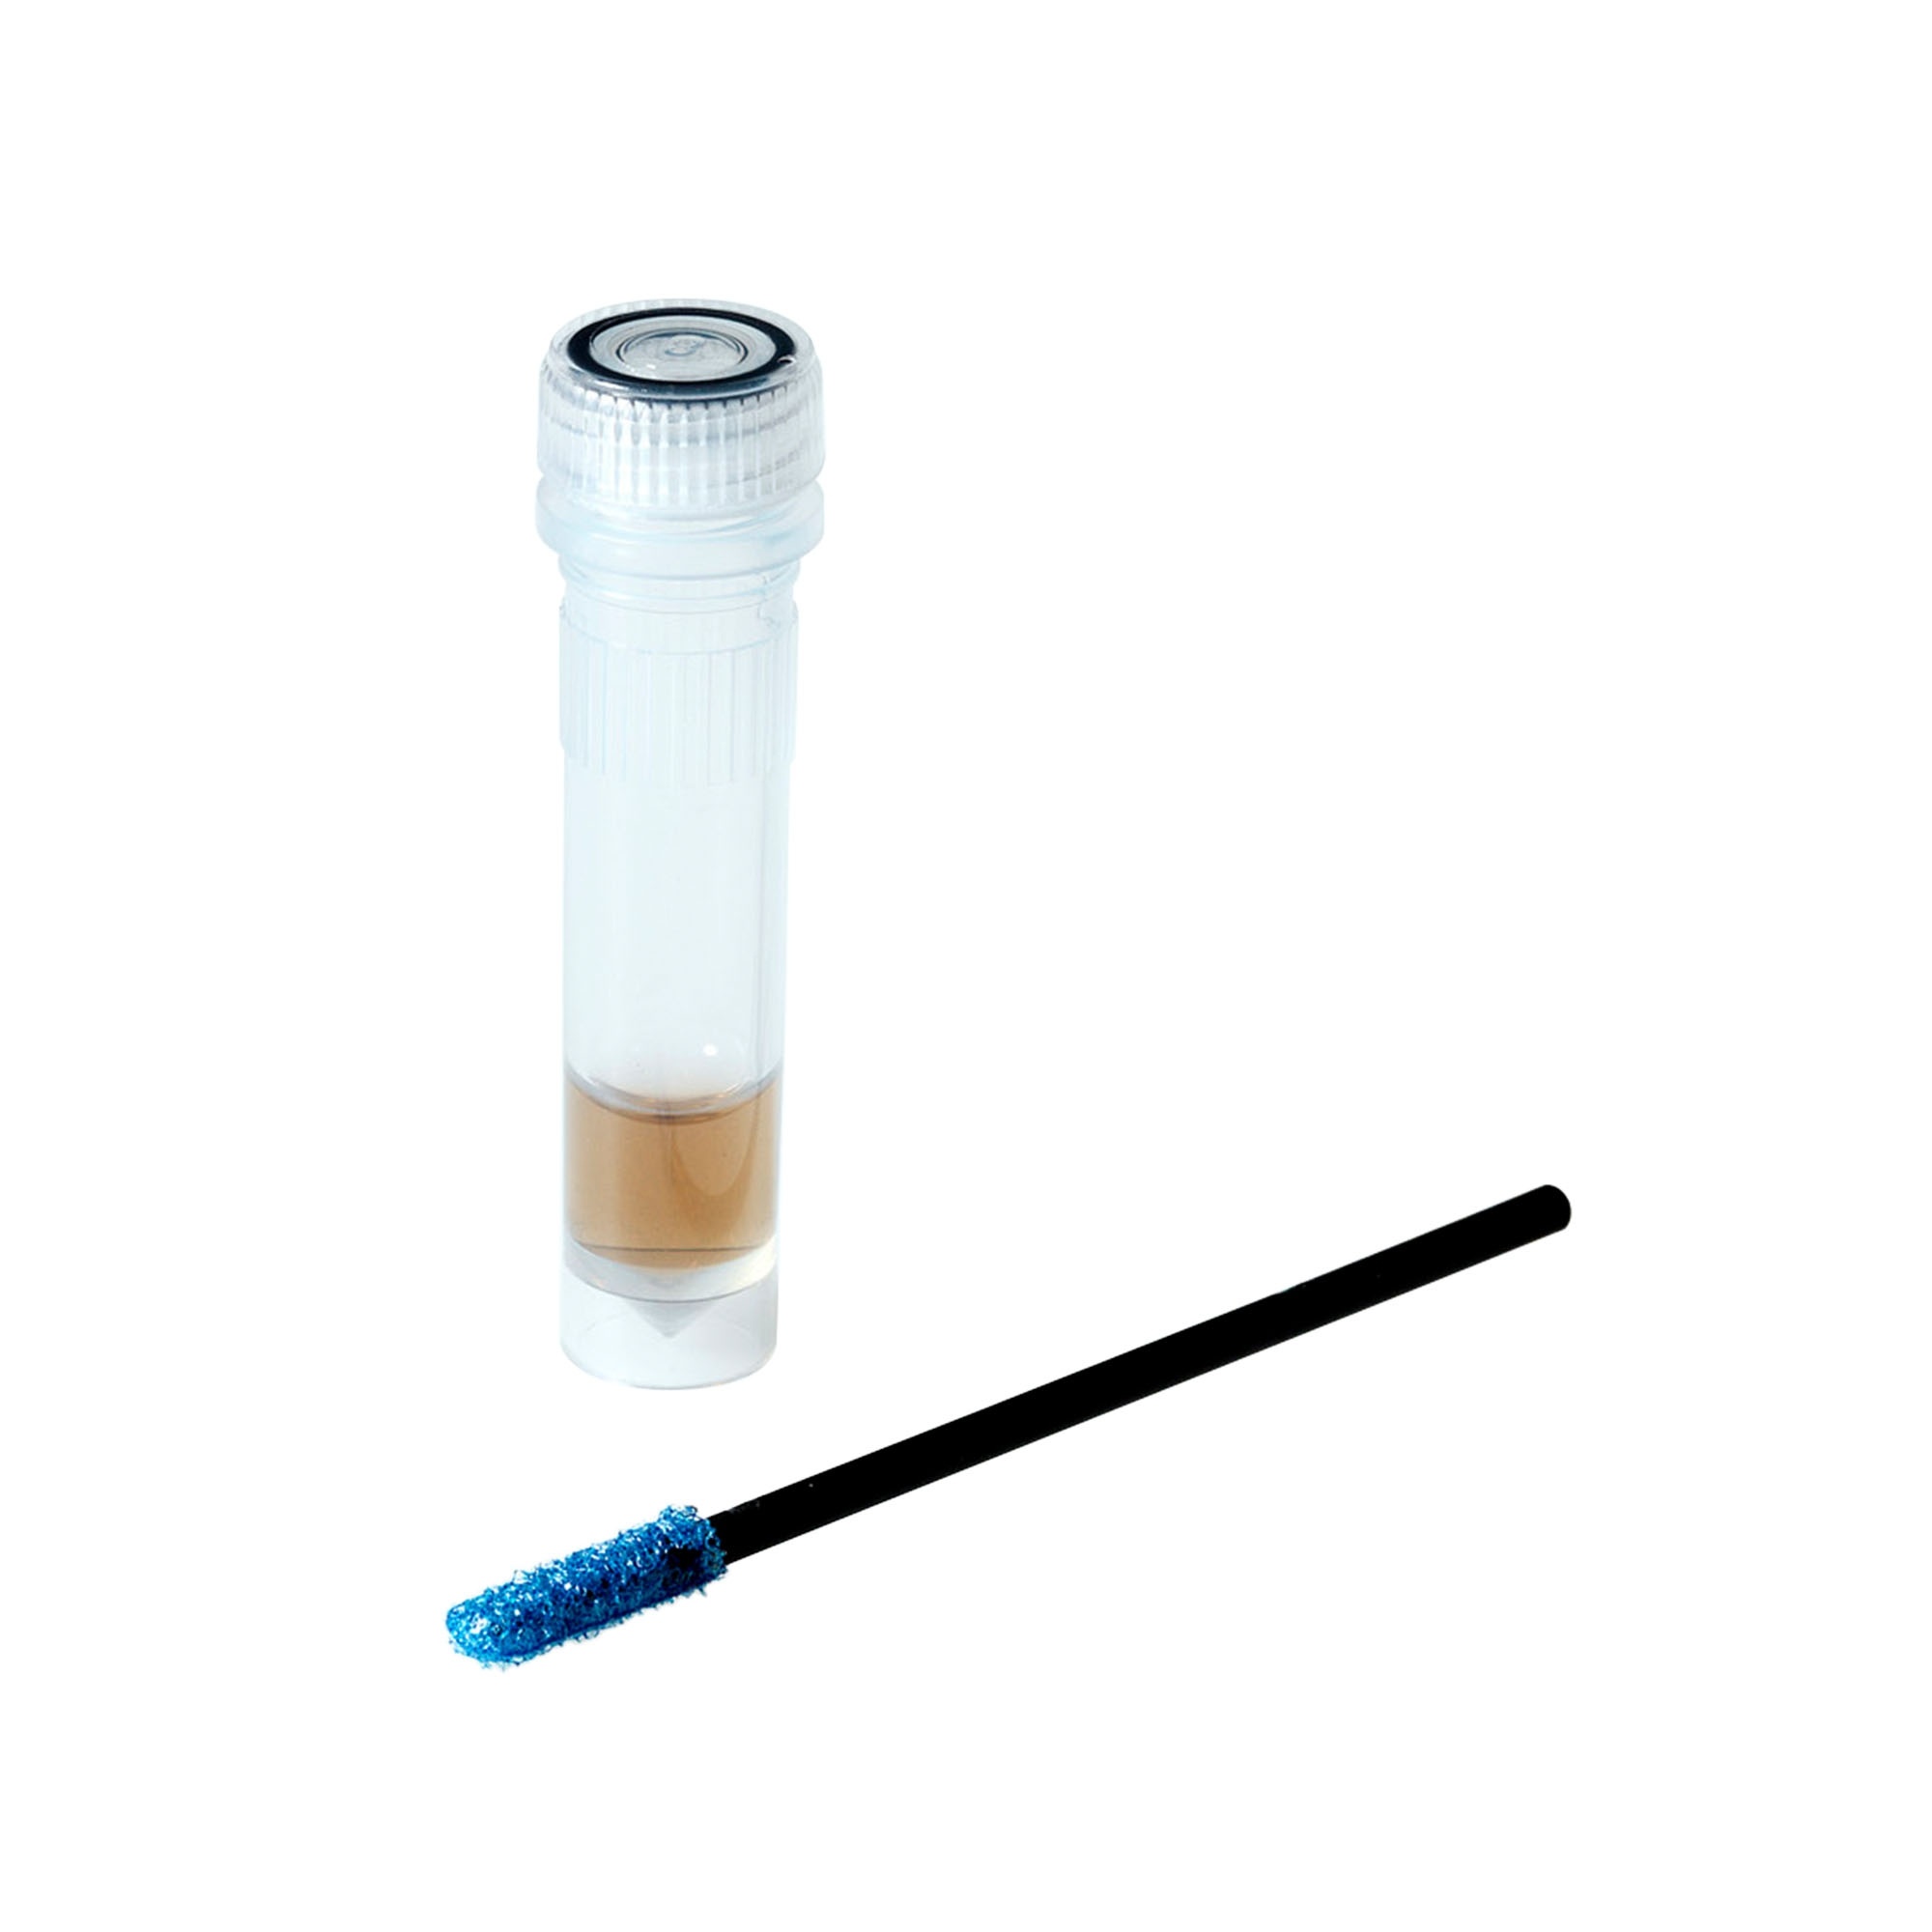 Getinge Assured Protein Test Instrument Surface Image